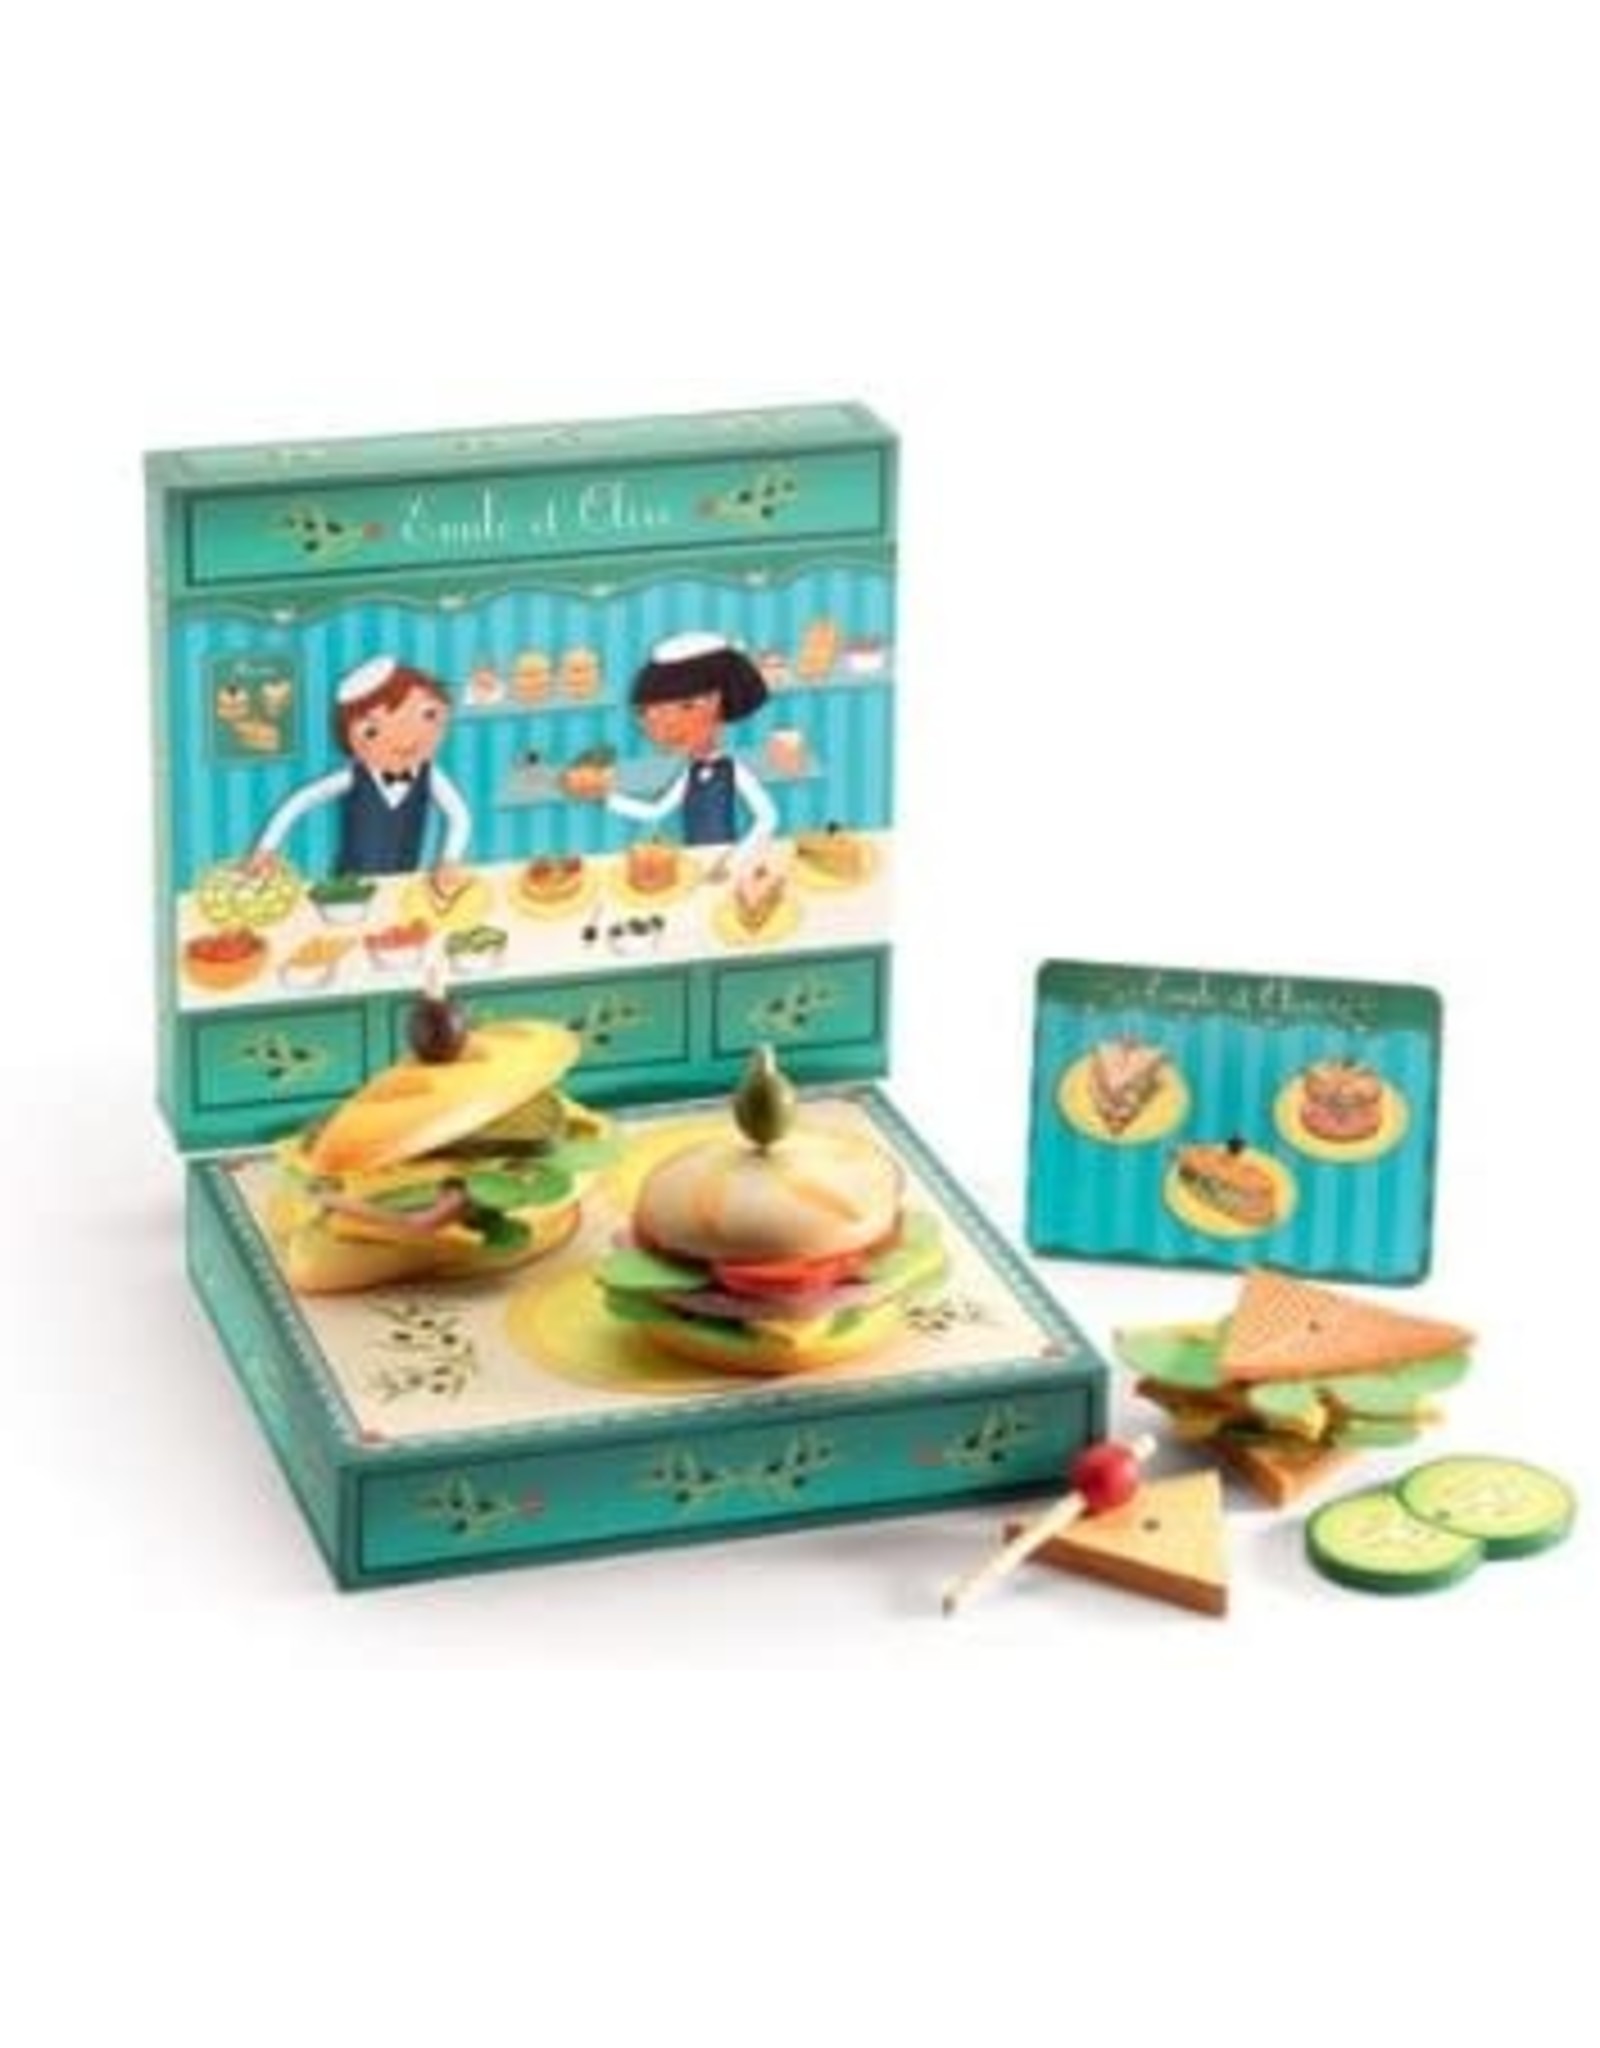 Emile & Olive Food Truck Sandwich Box Play Set